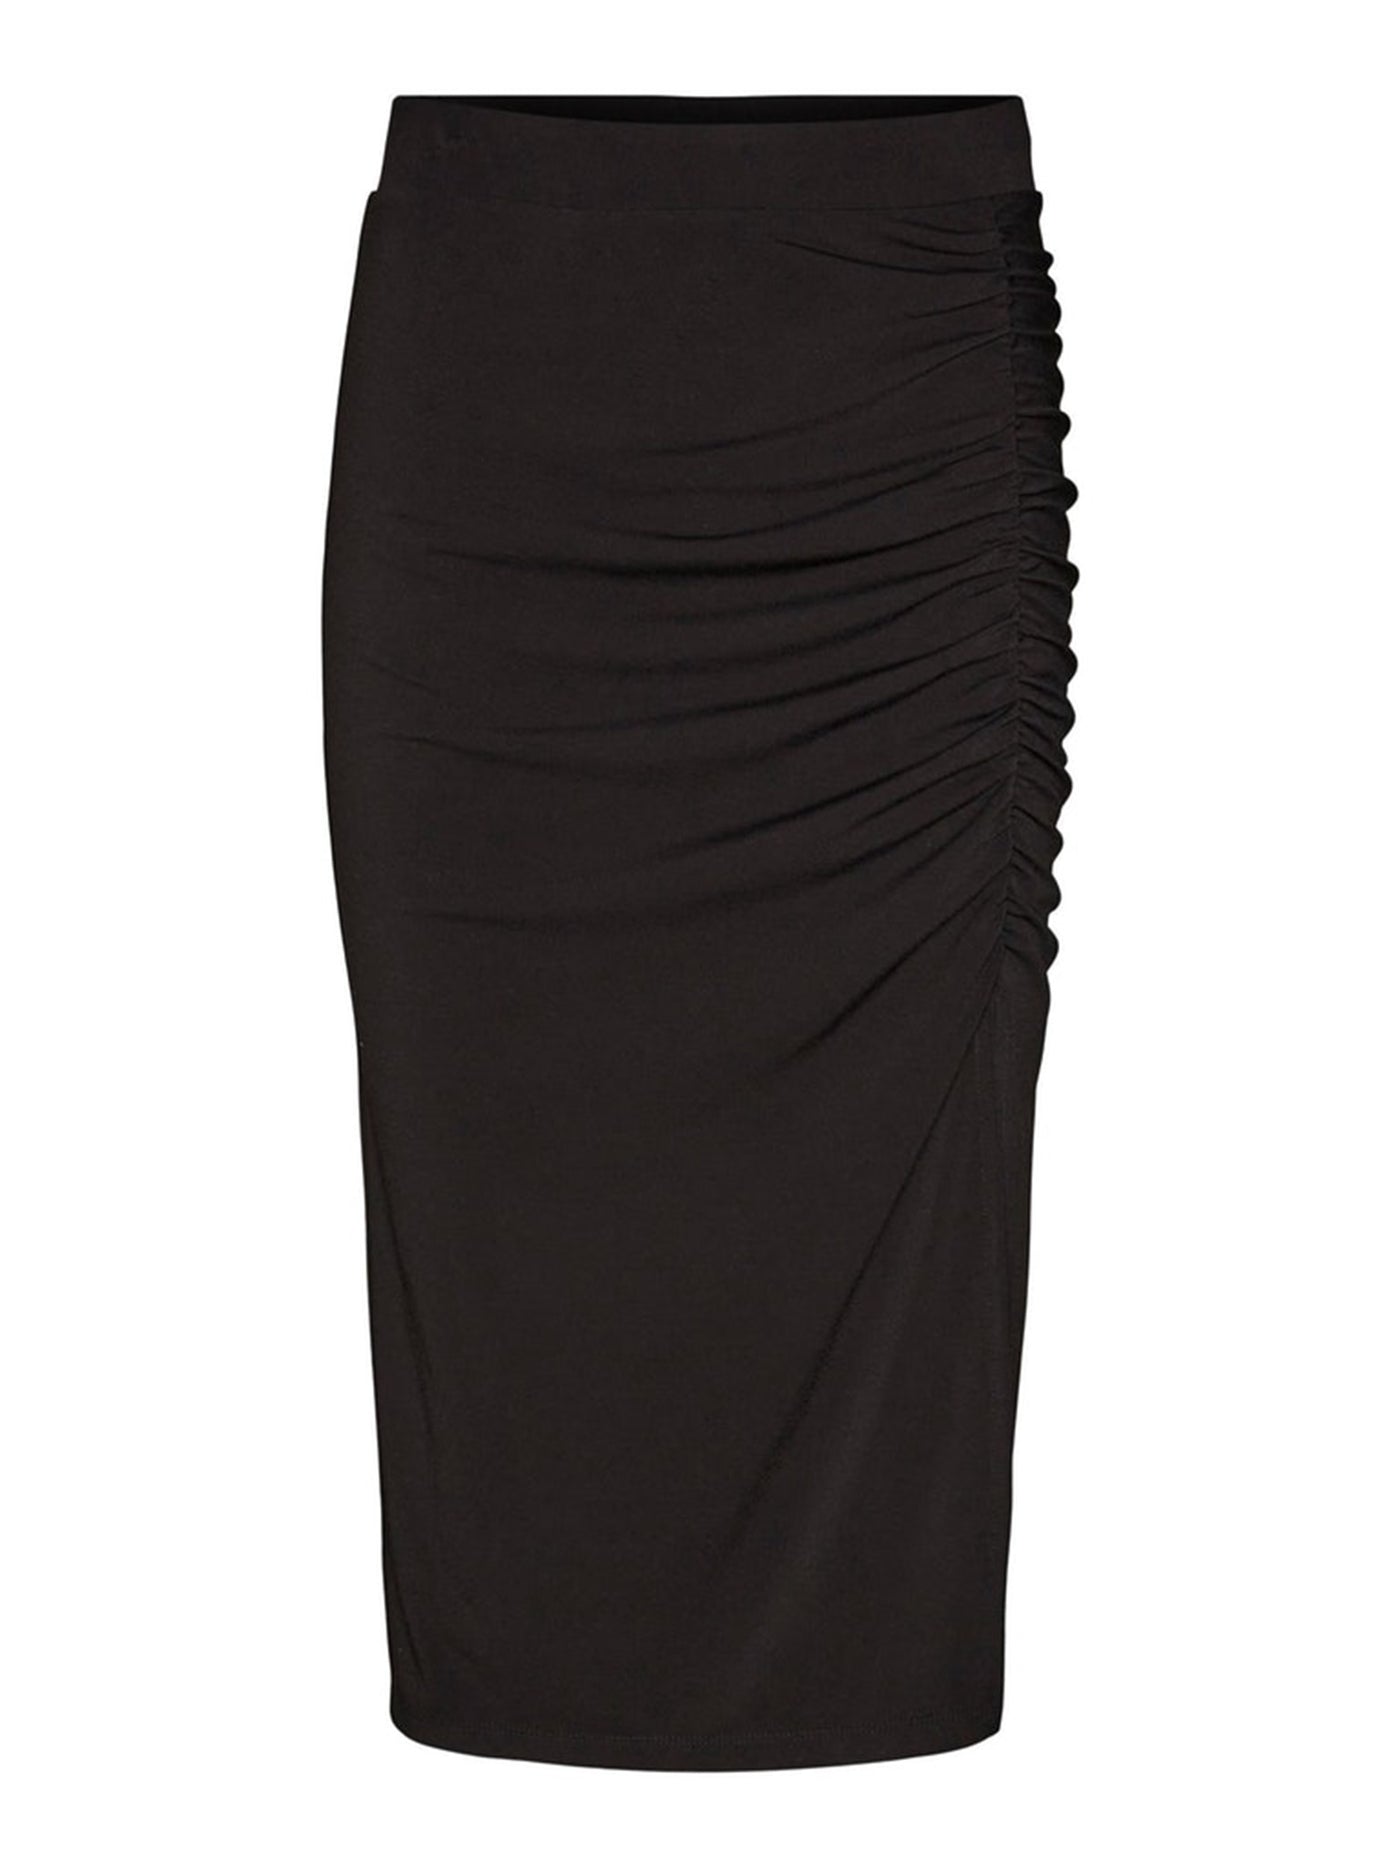 Alberta High Waist Skirt - Black - Vero Moda - Black 5